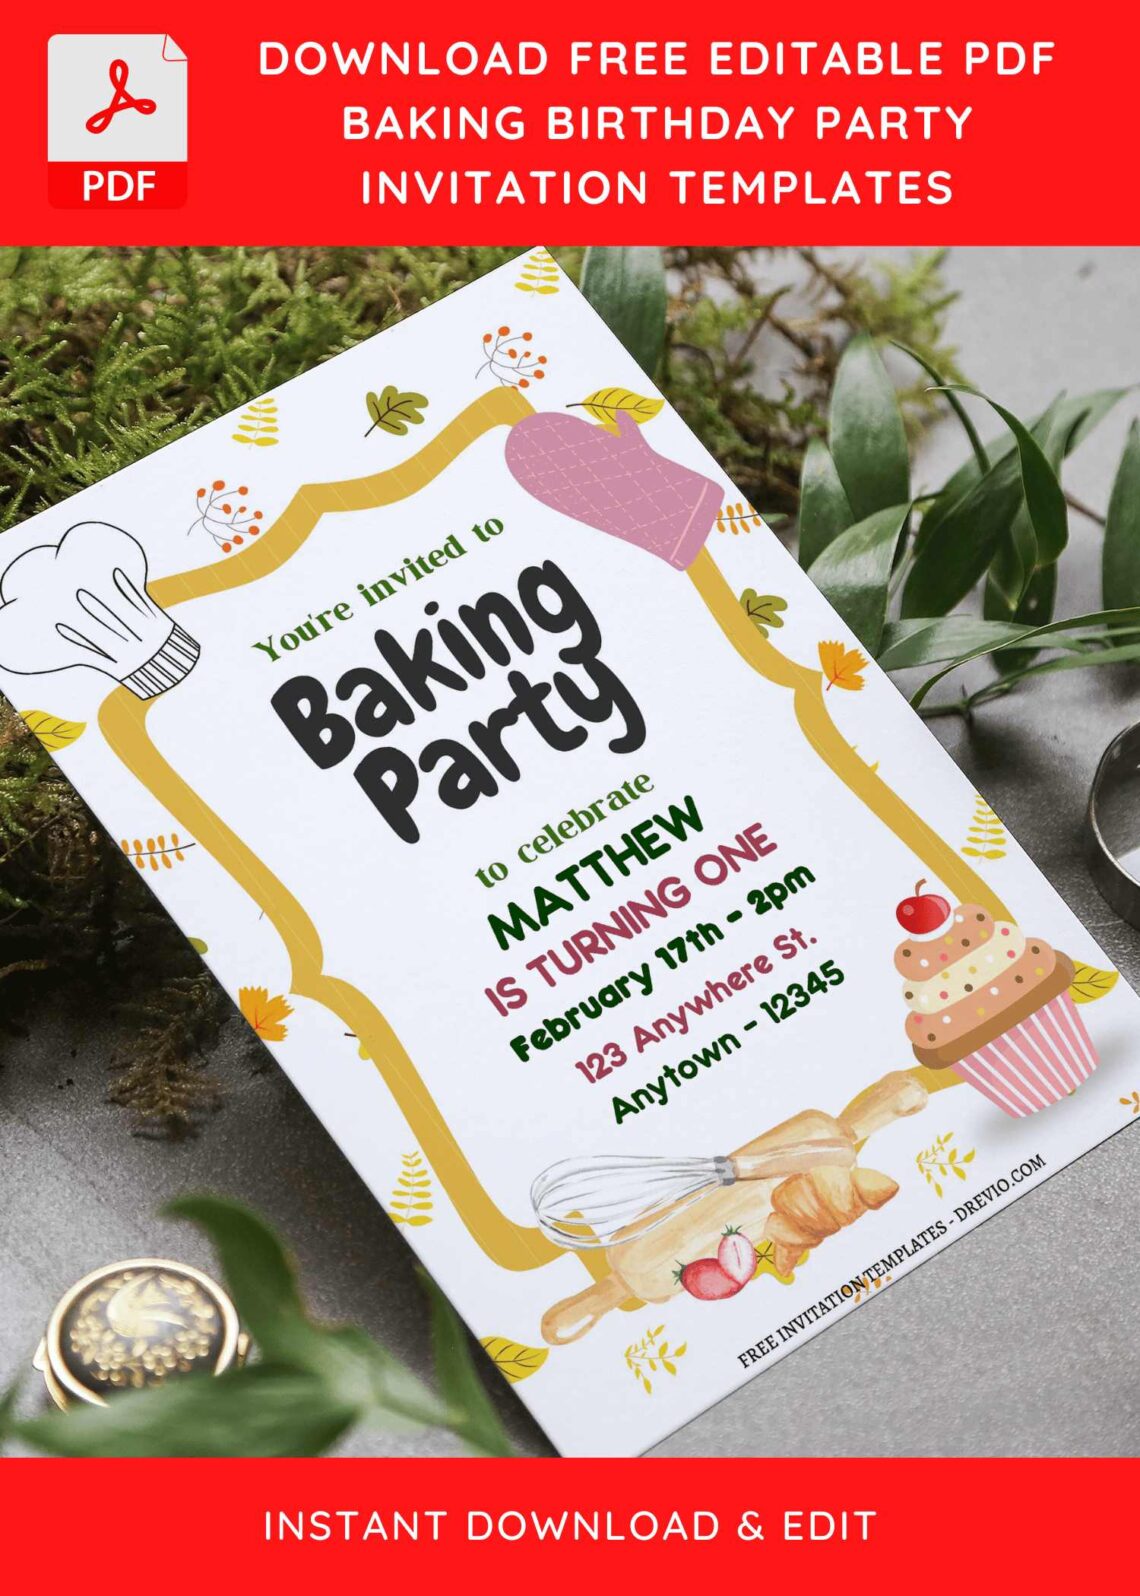 (Free Editable PDF) Adorable Baking Themed Birthday Invitation Templates F